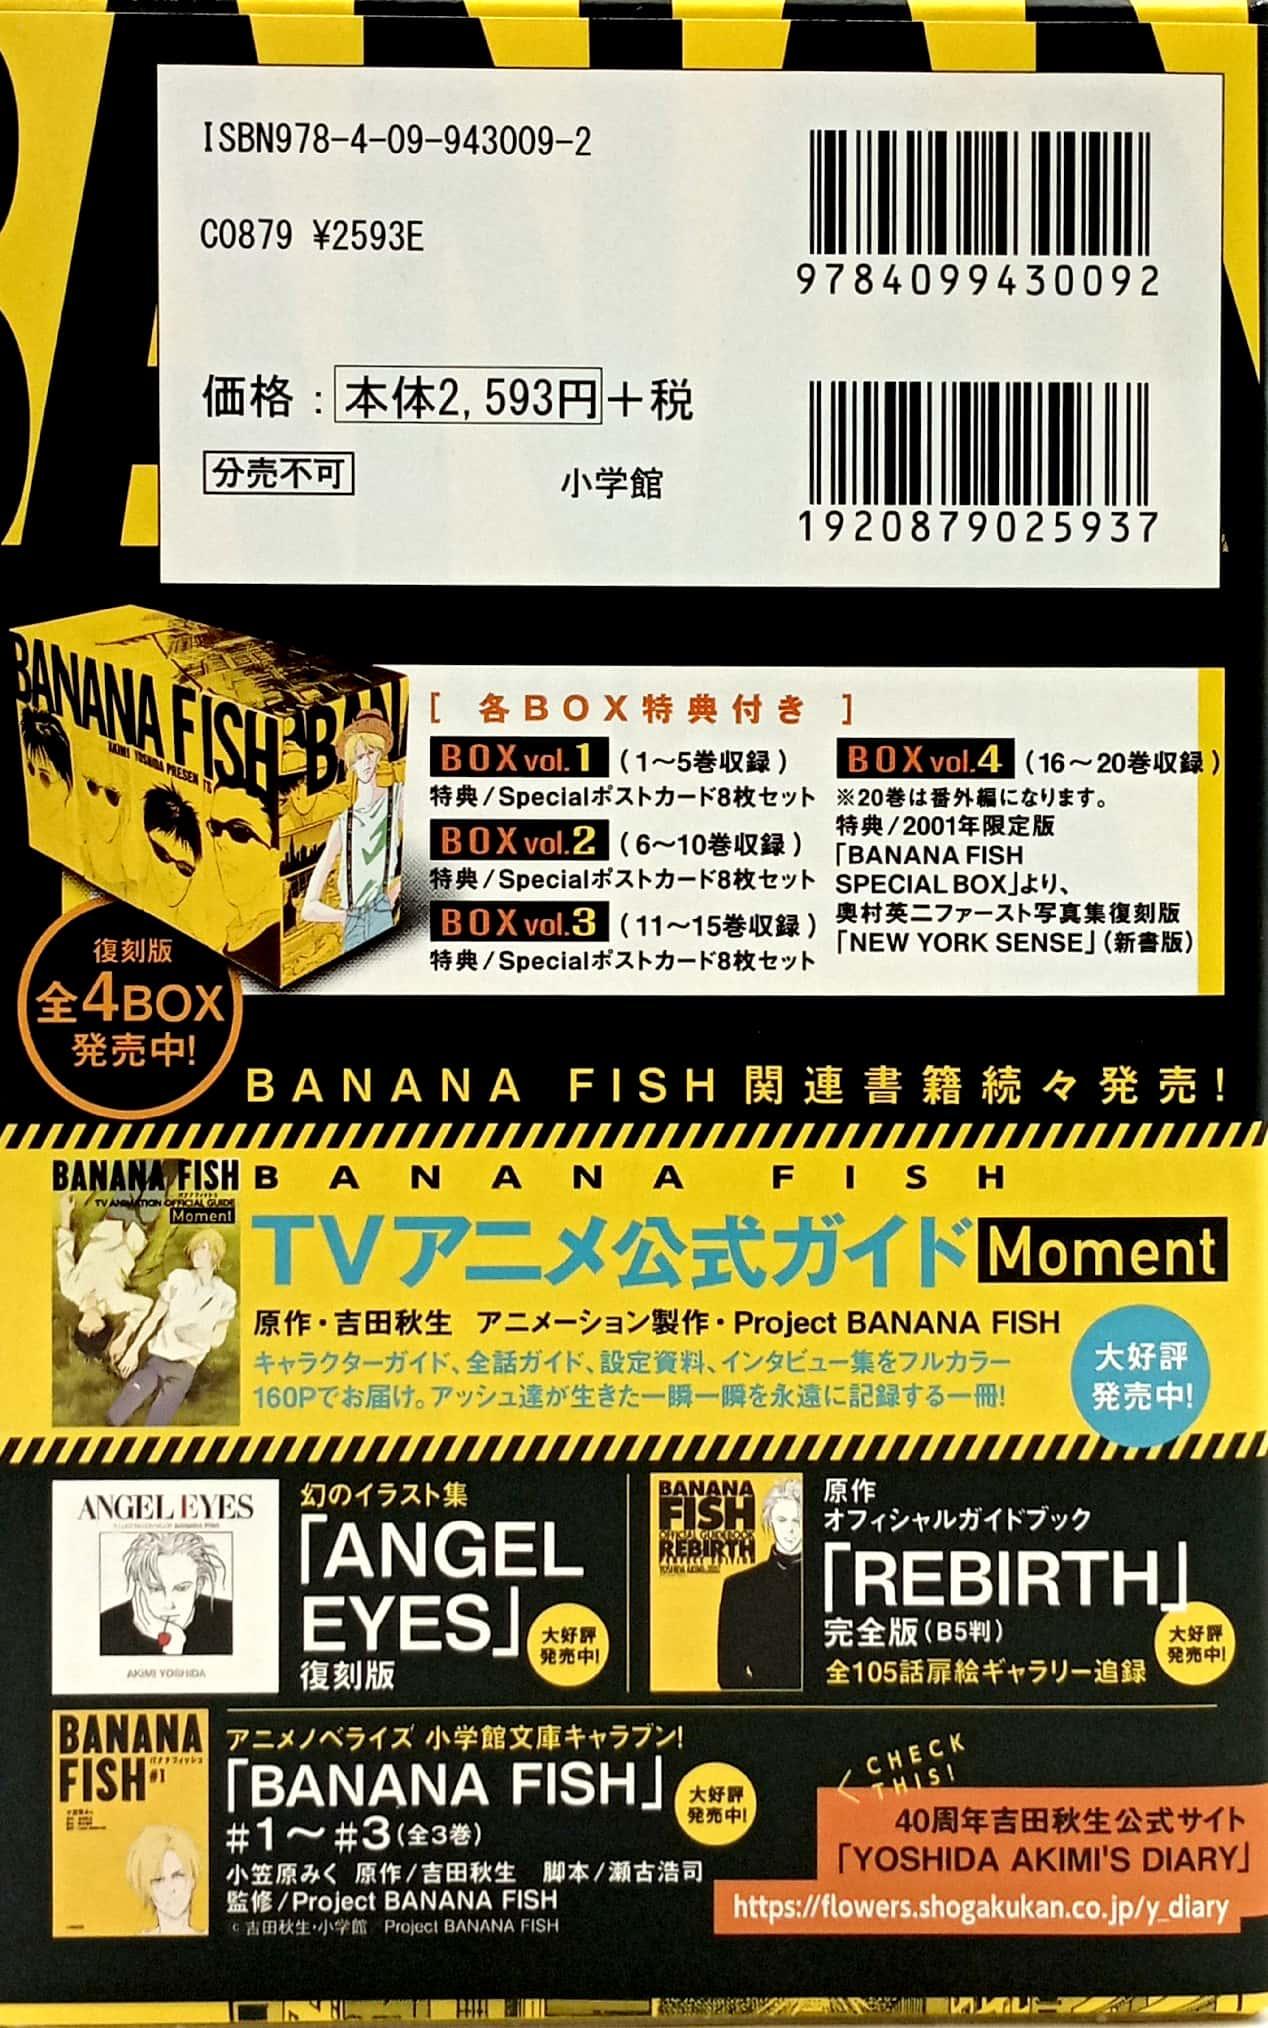 Banana Fish Comics Box Set Vol. 2 (Set Of Volume 6 - 10) (Japanese Edition)